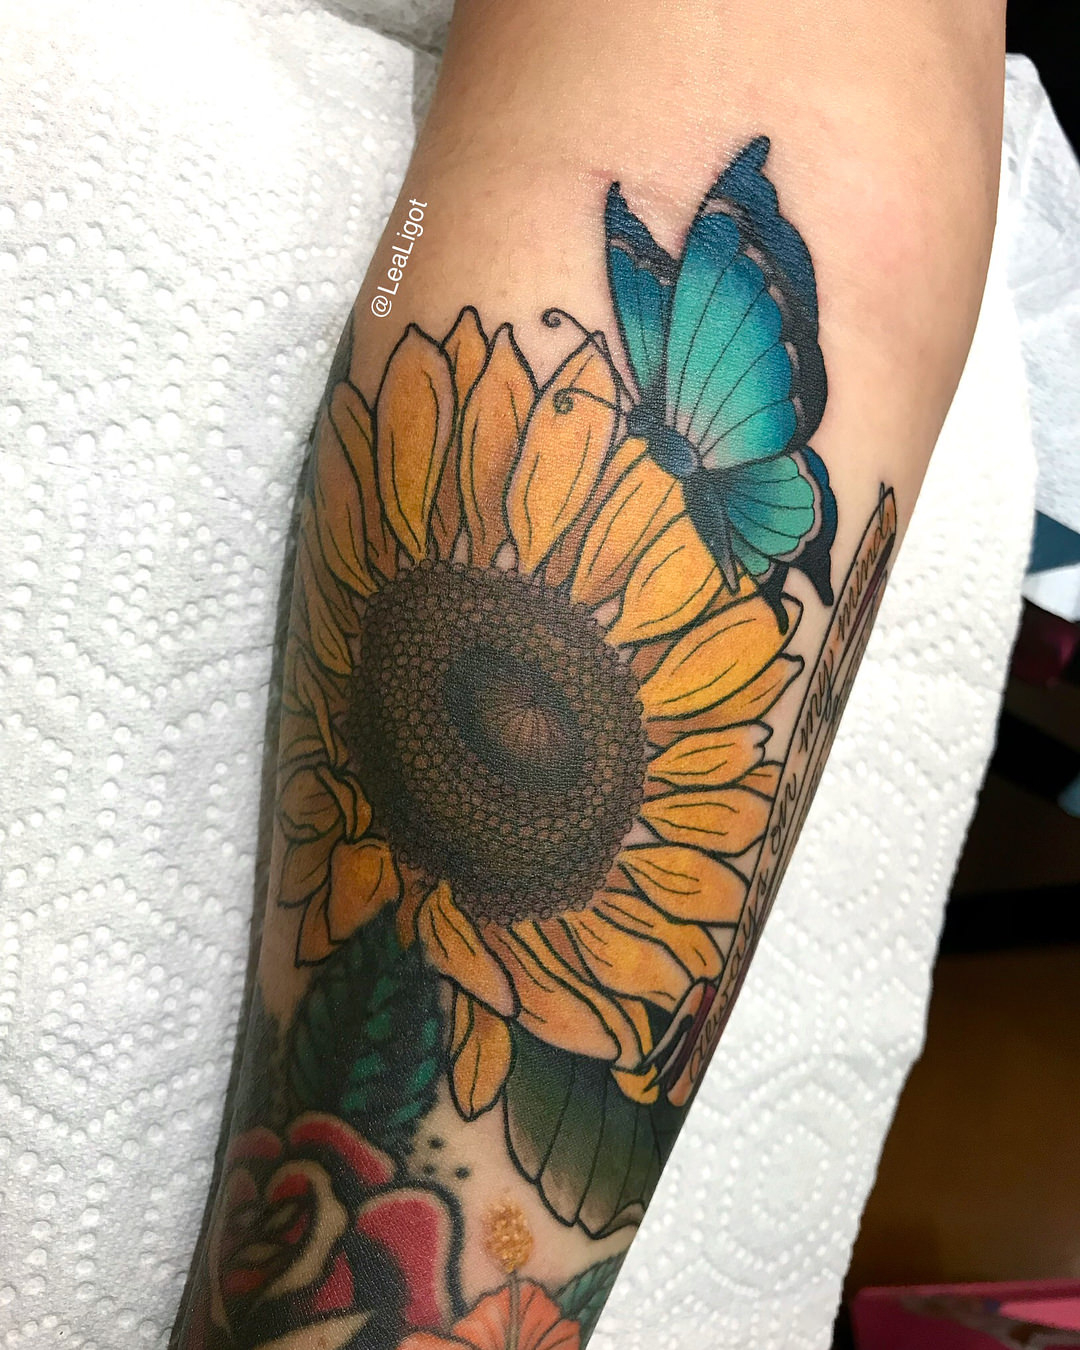 144 Sunflower Tattoos That Will Brighten Up Your Life regarding measurements 1080 X 1350